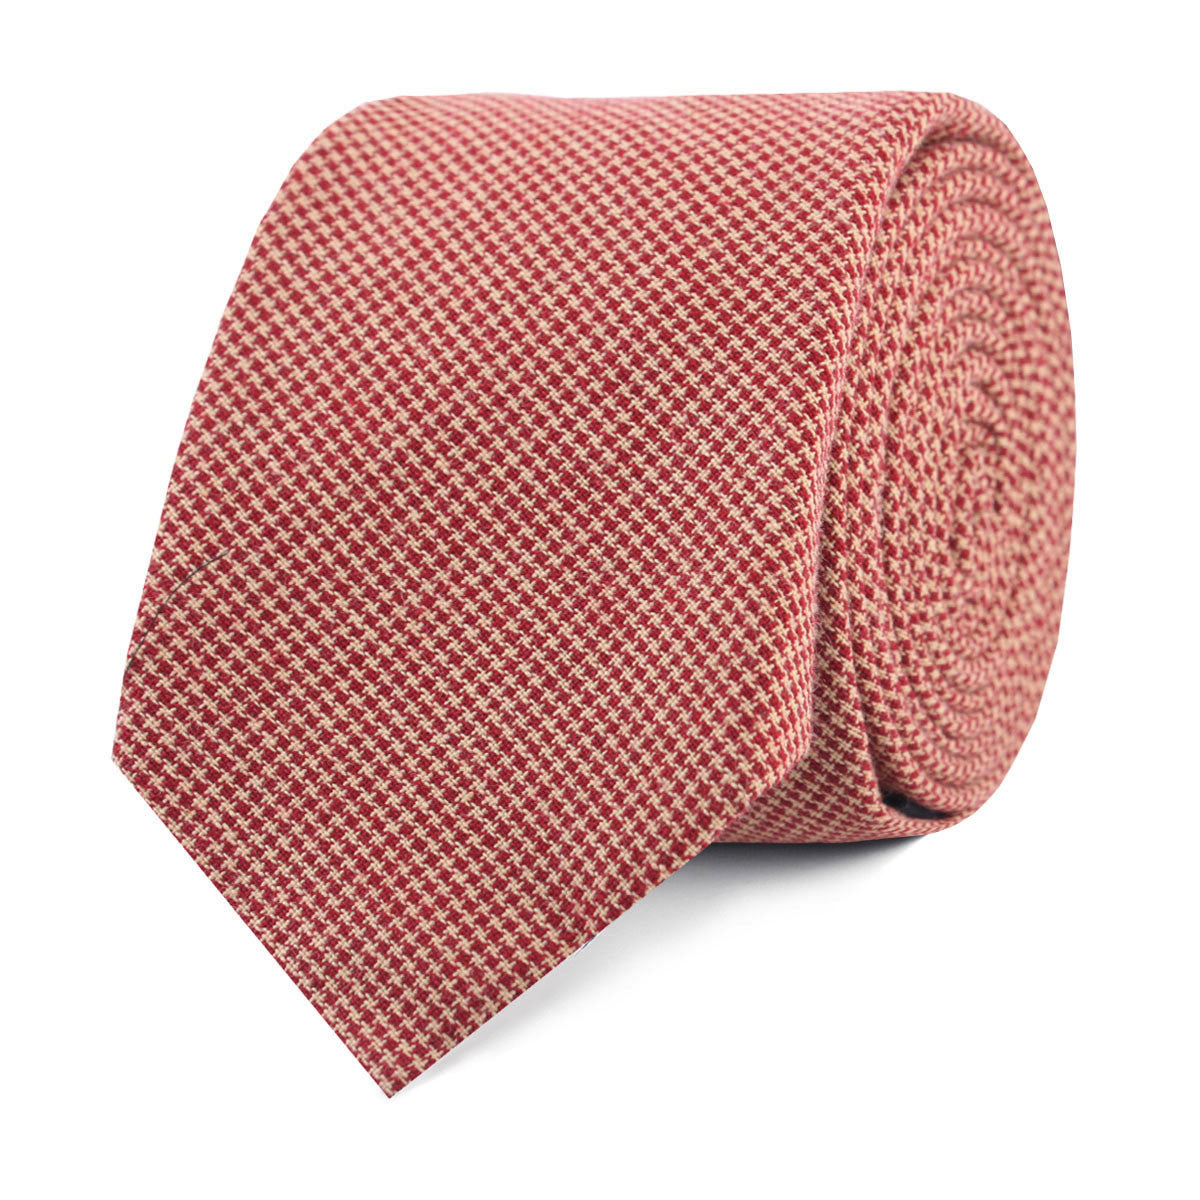 Khaki Red Houndstooth Blend Skinny Tie | Mens Cotton Slim Ties Necktie ...